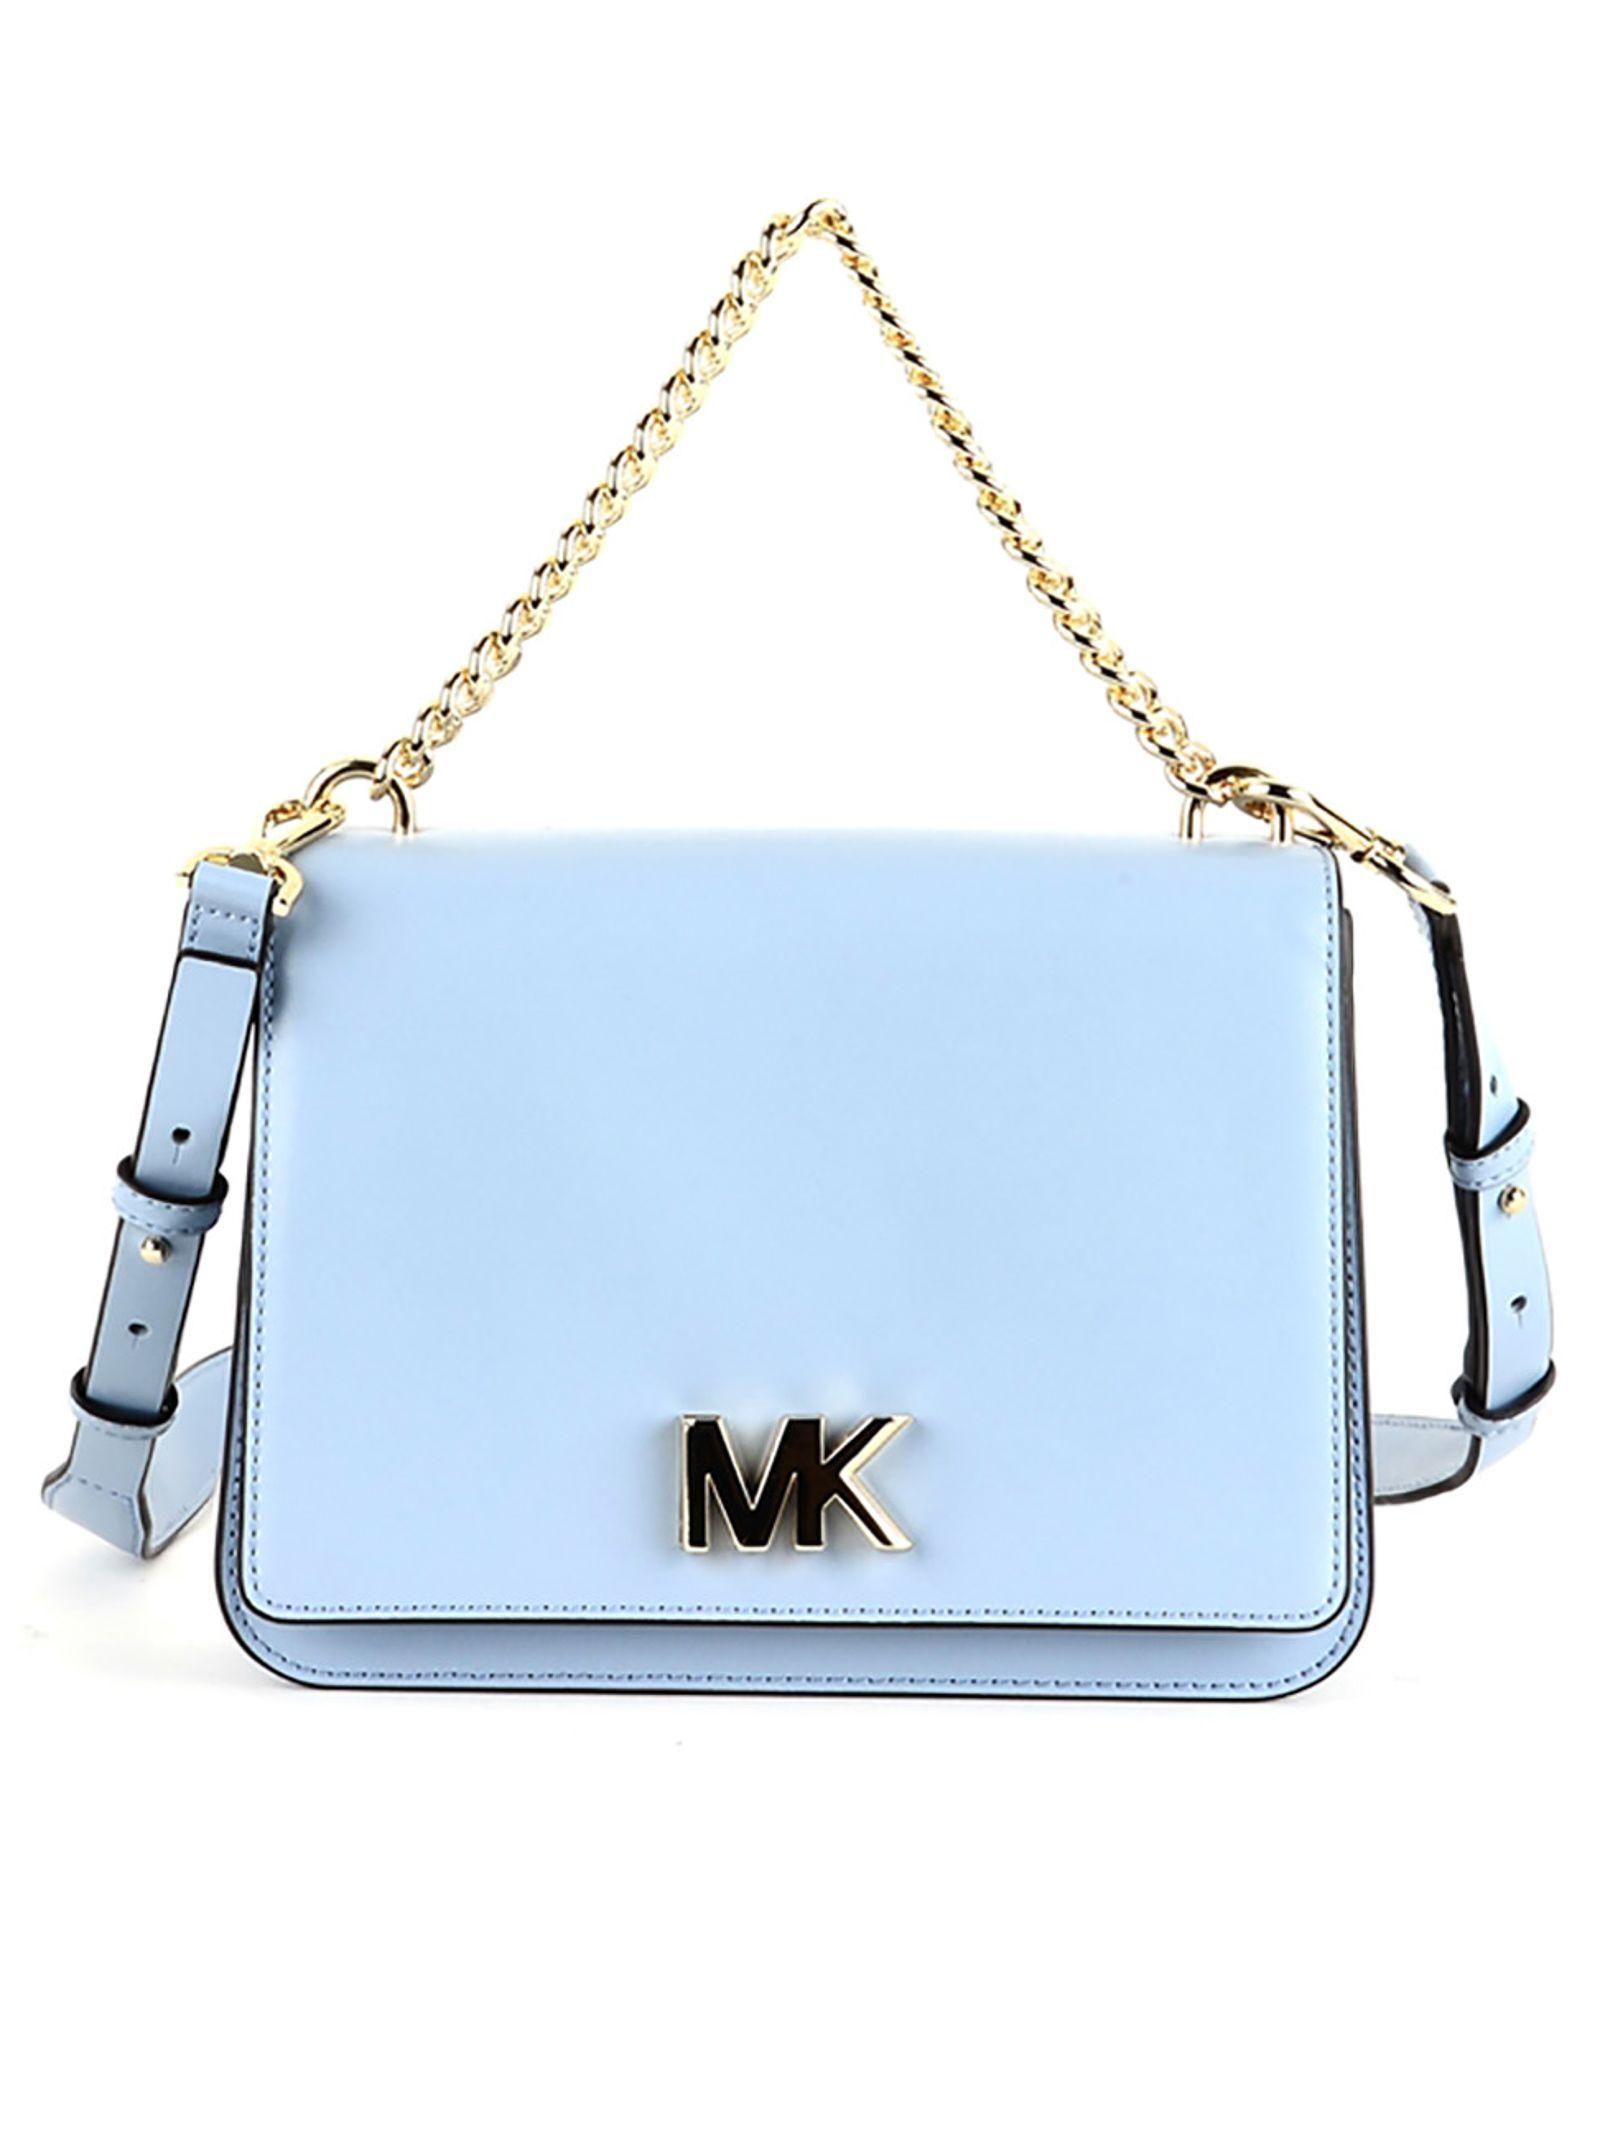 mk blue bag